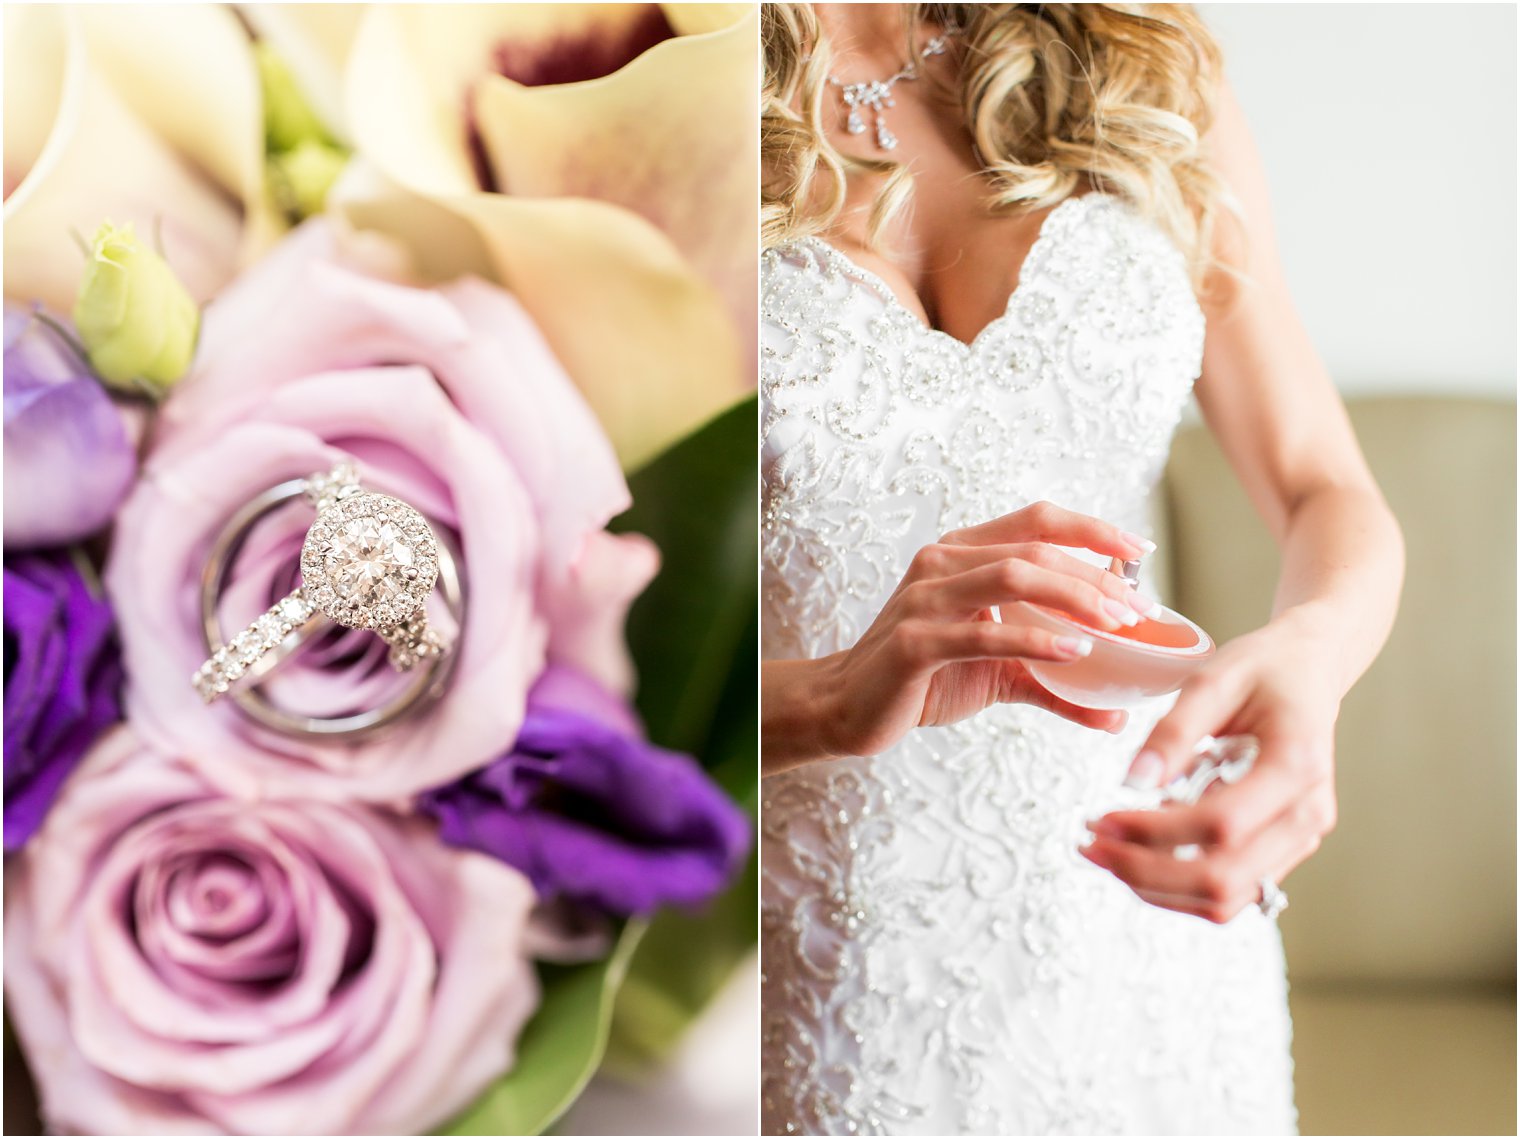 Wedding day details | Photos by Idalia Photography